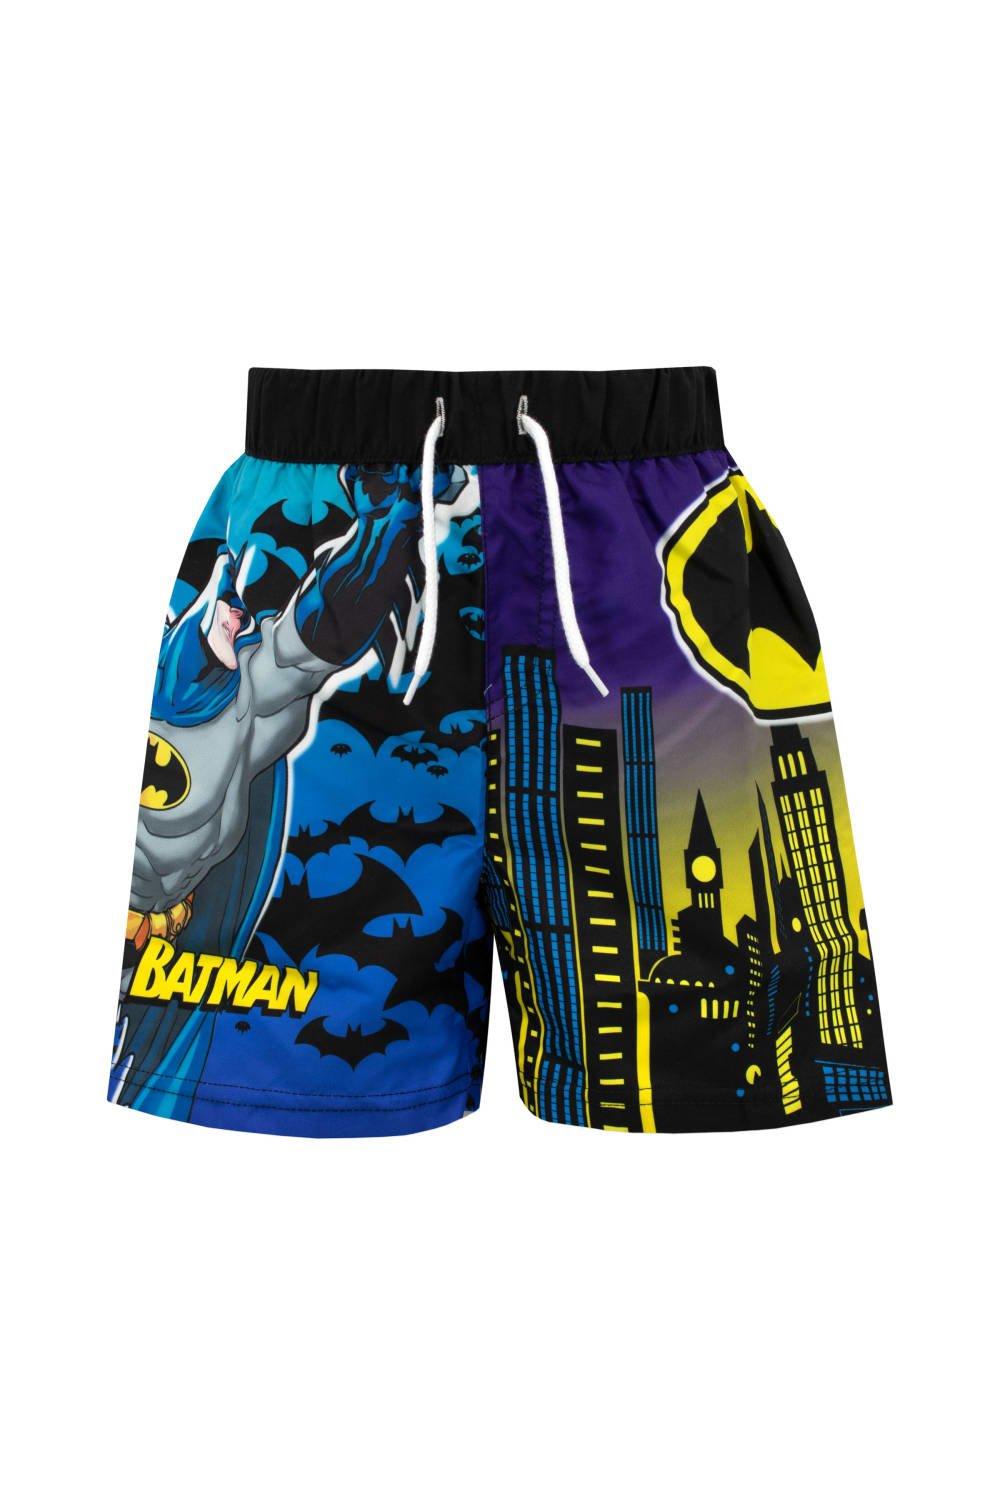 Batman Swim Shorts